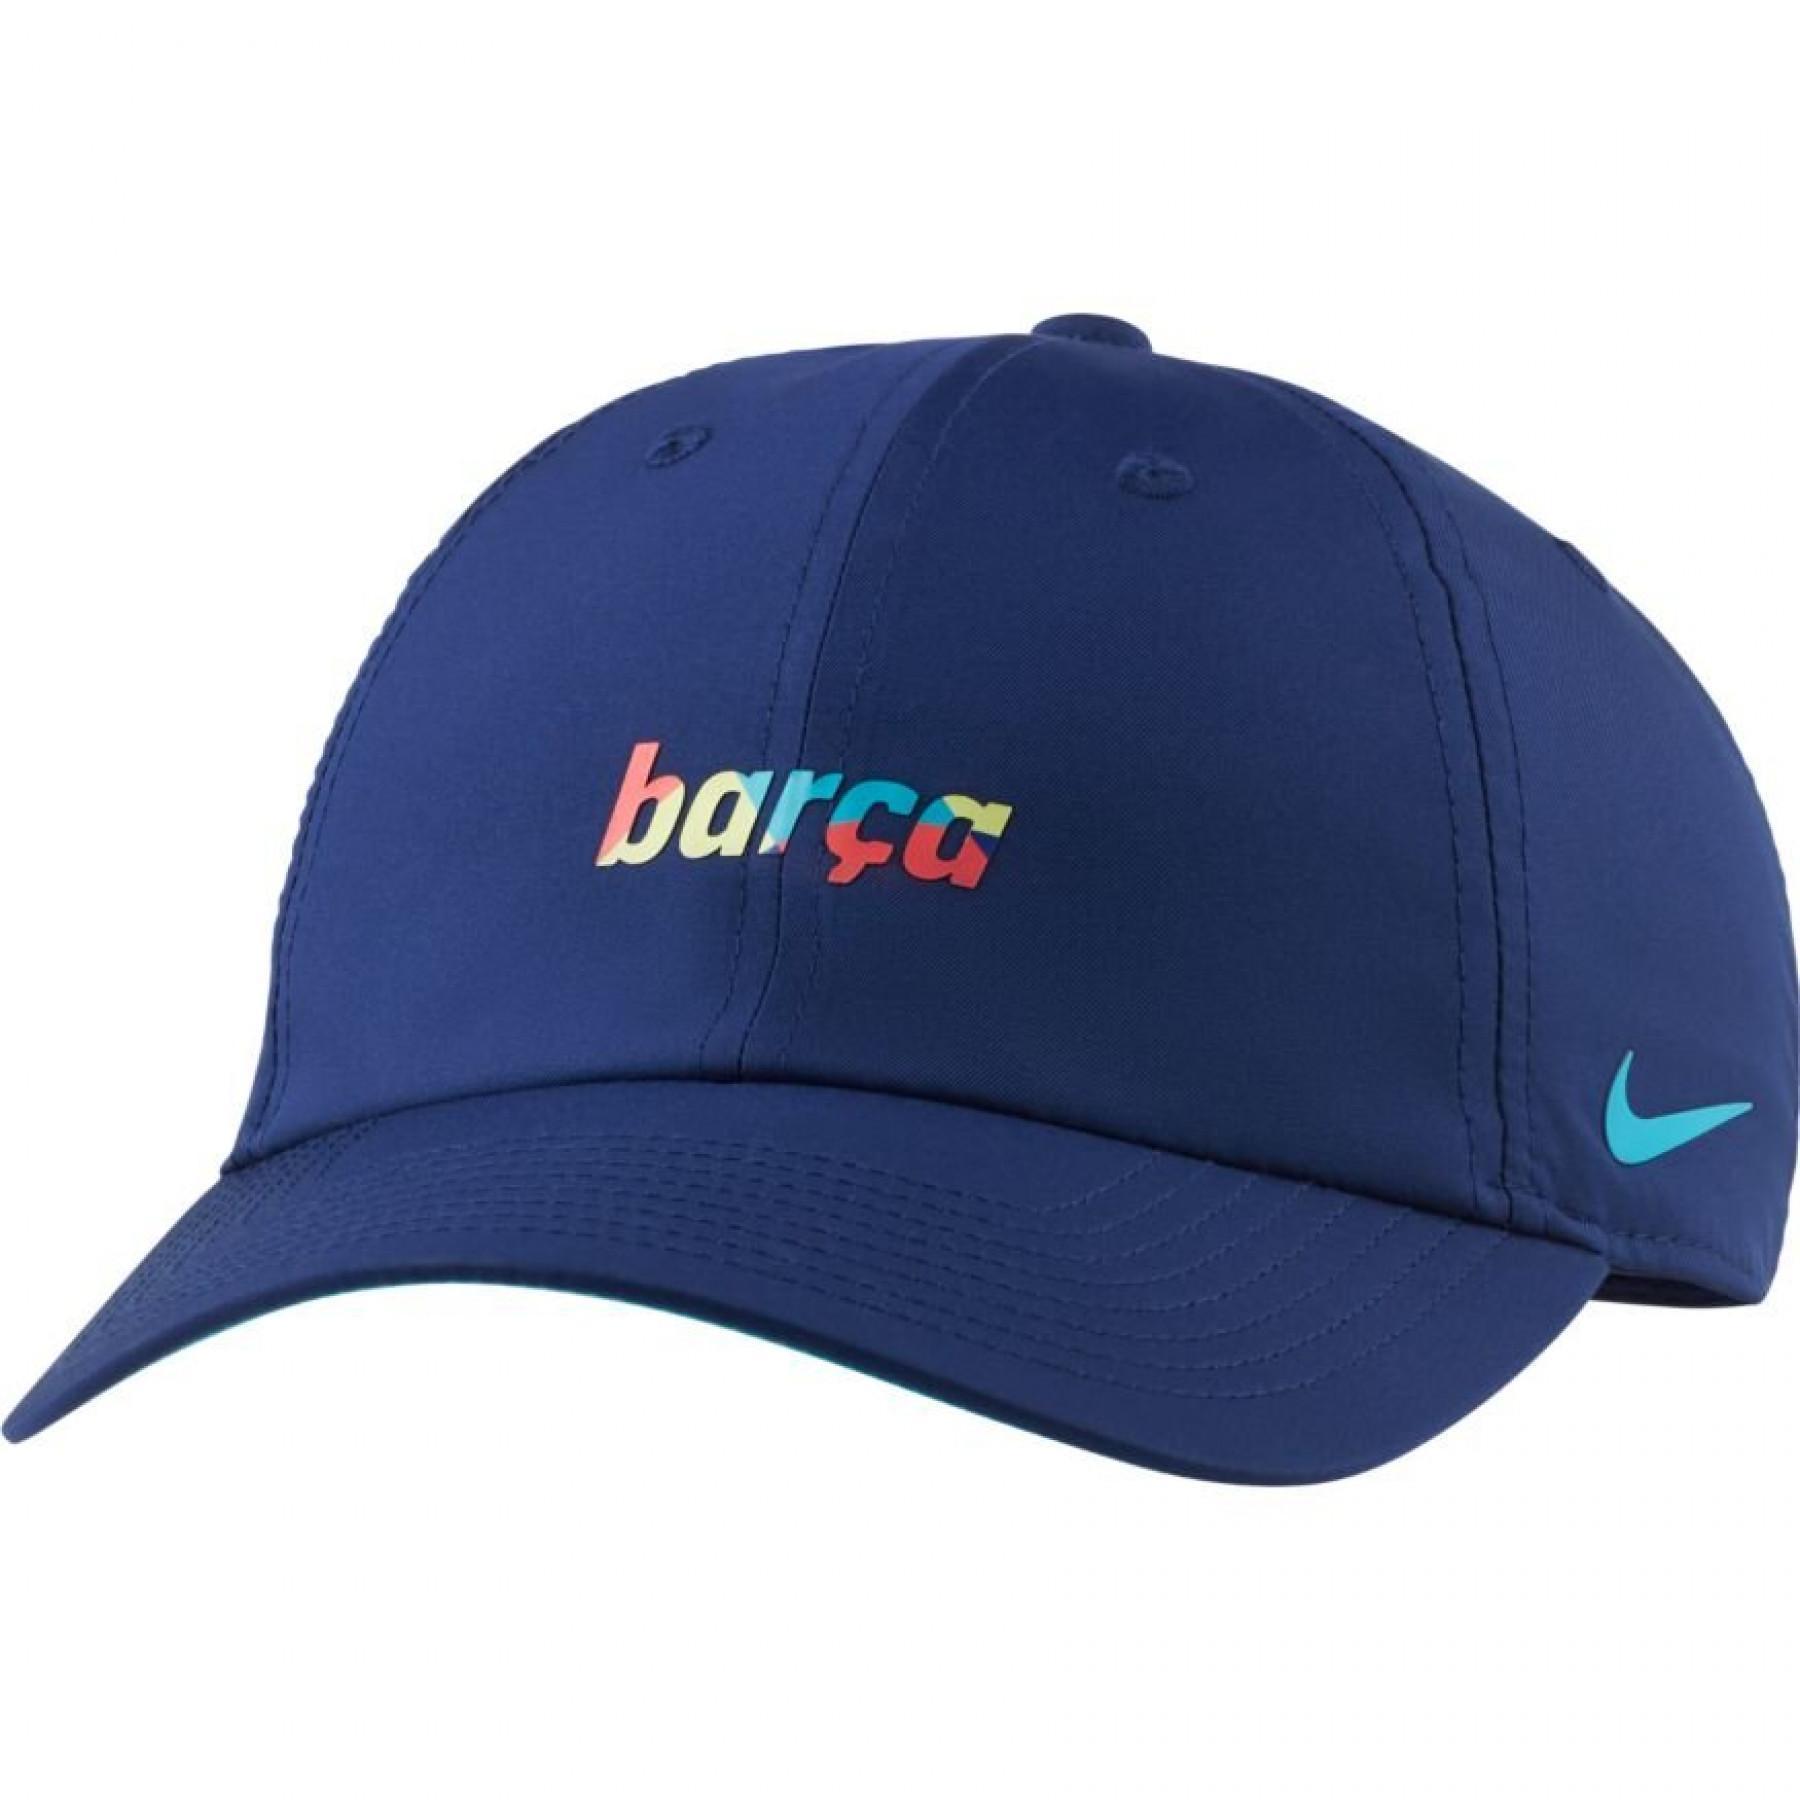 Barcelona adjustable cap